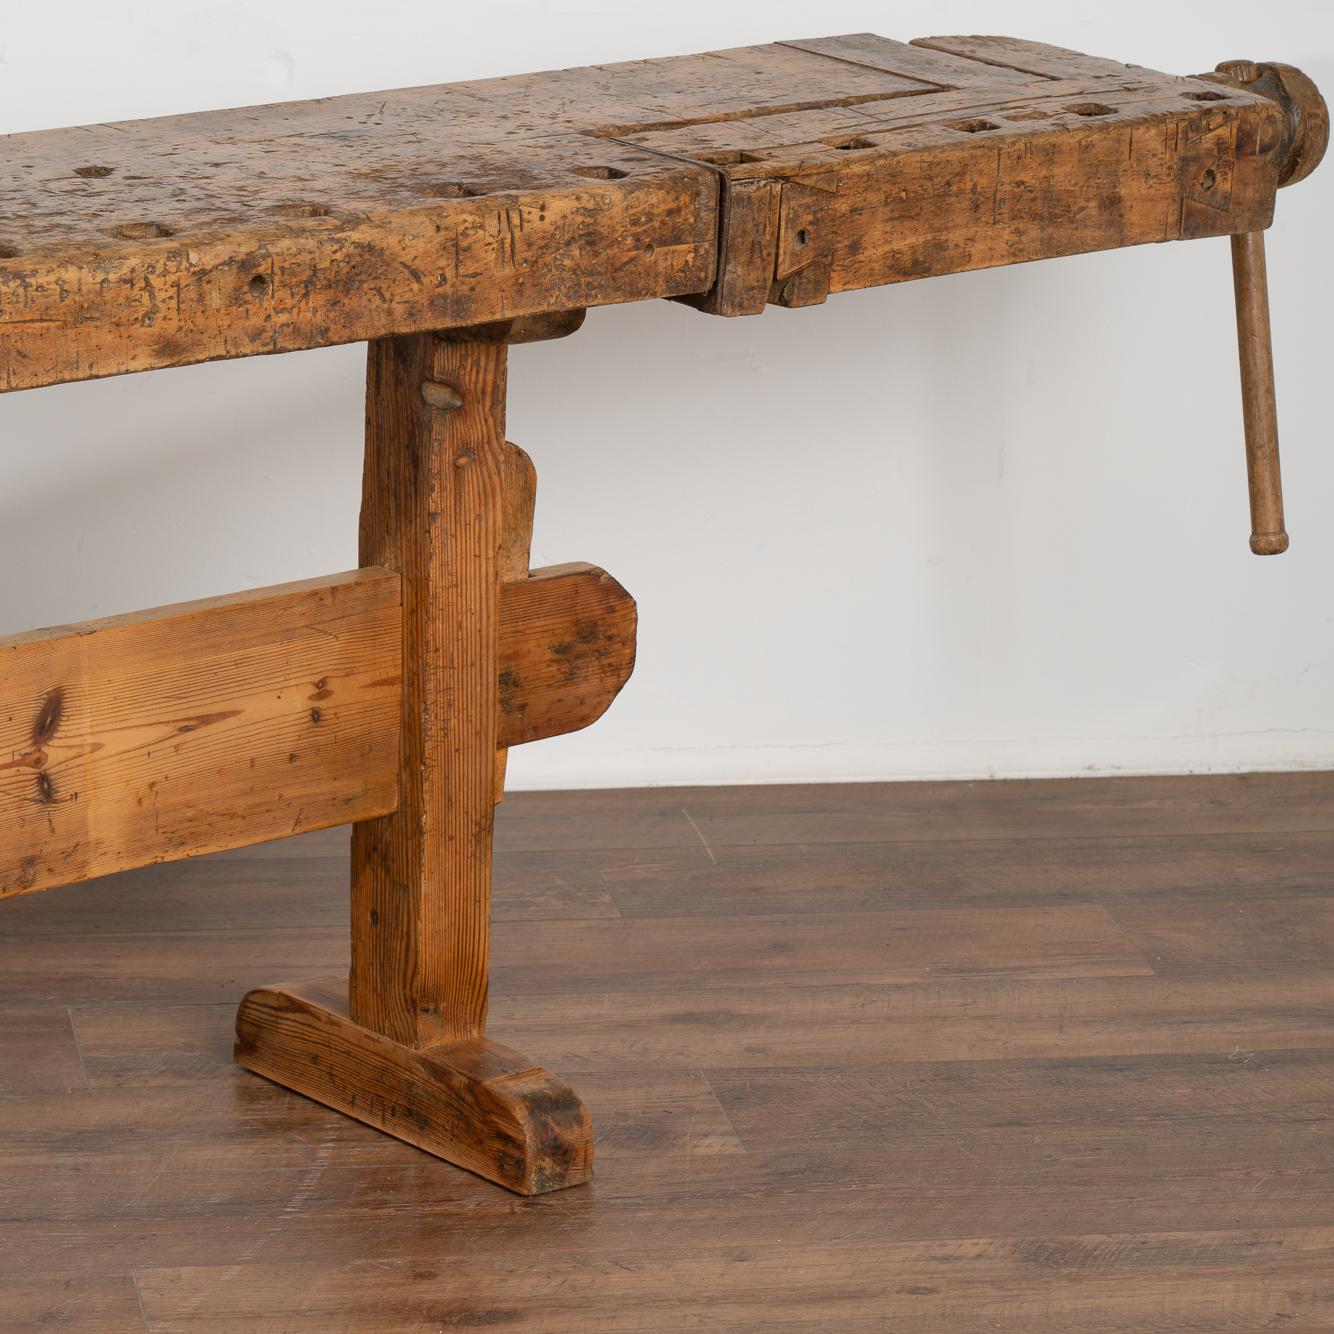 20th Century Rustic Narrow Console Table Carpenter's Work Table, Denmark, circa 1900s